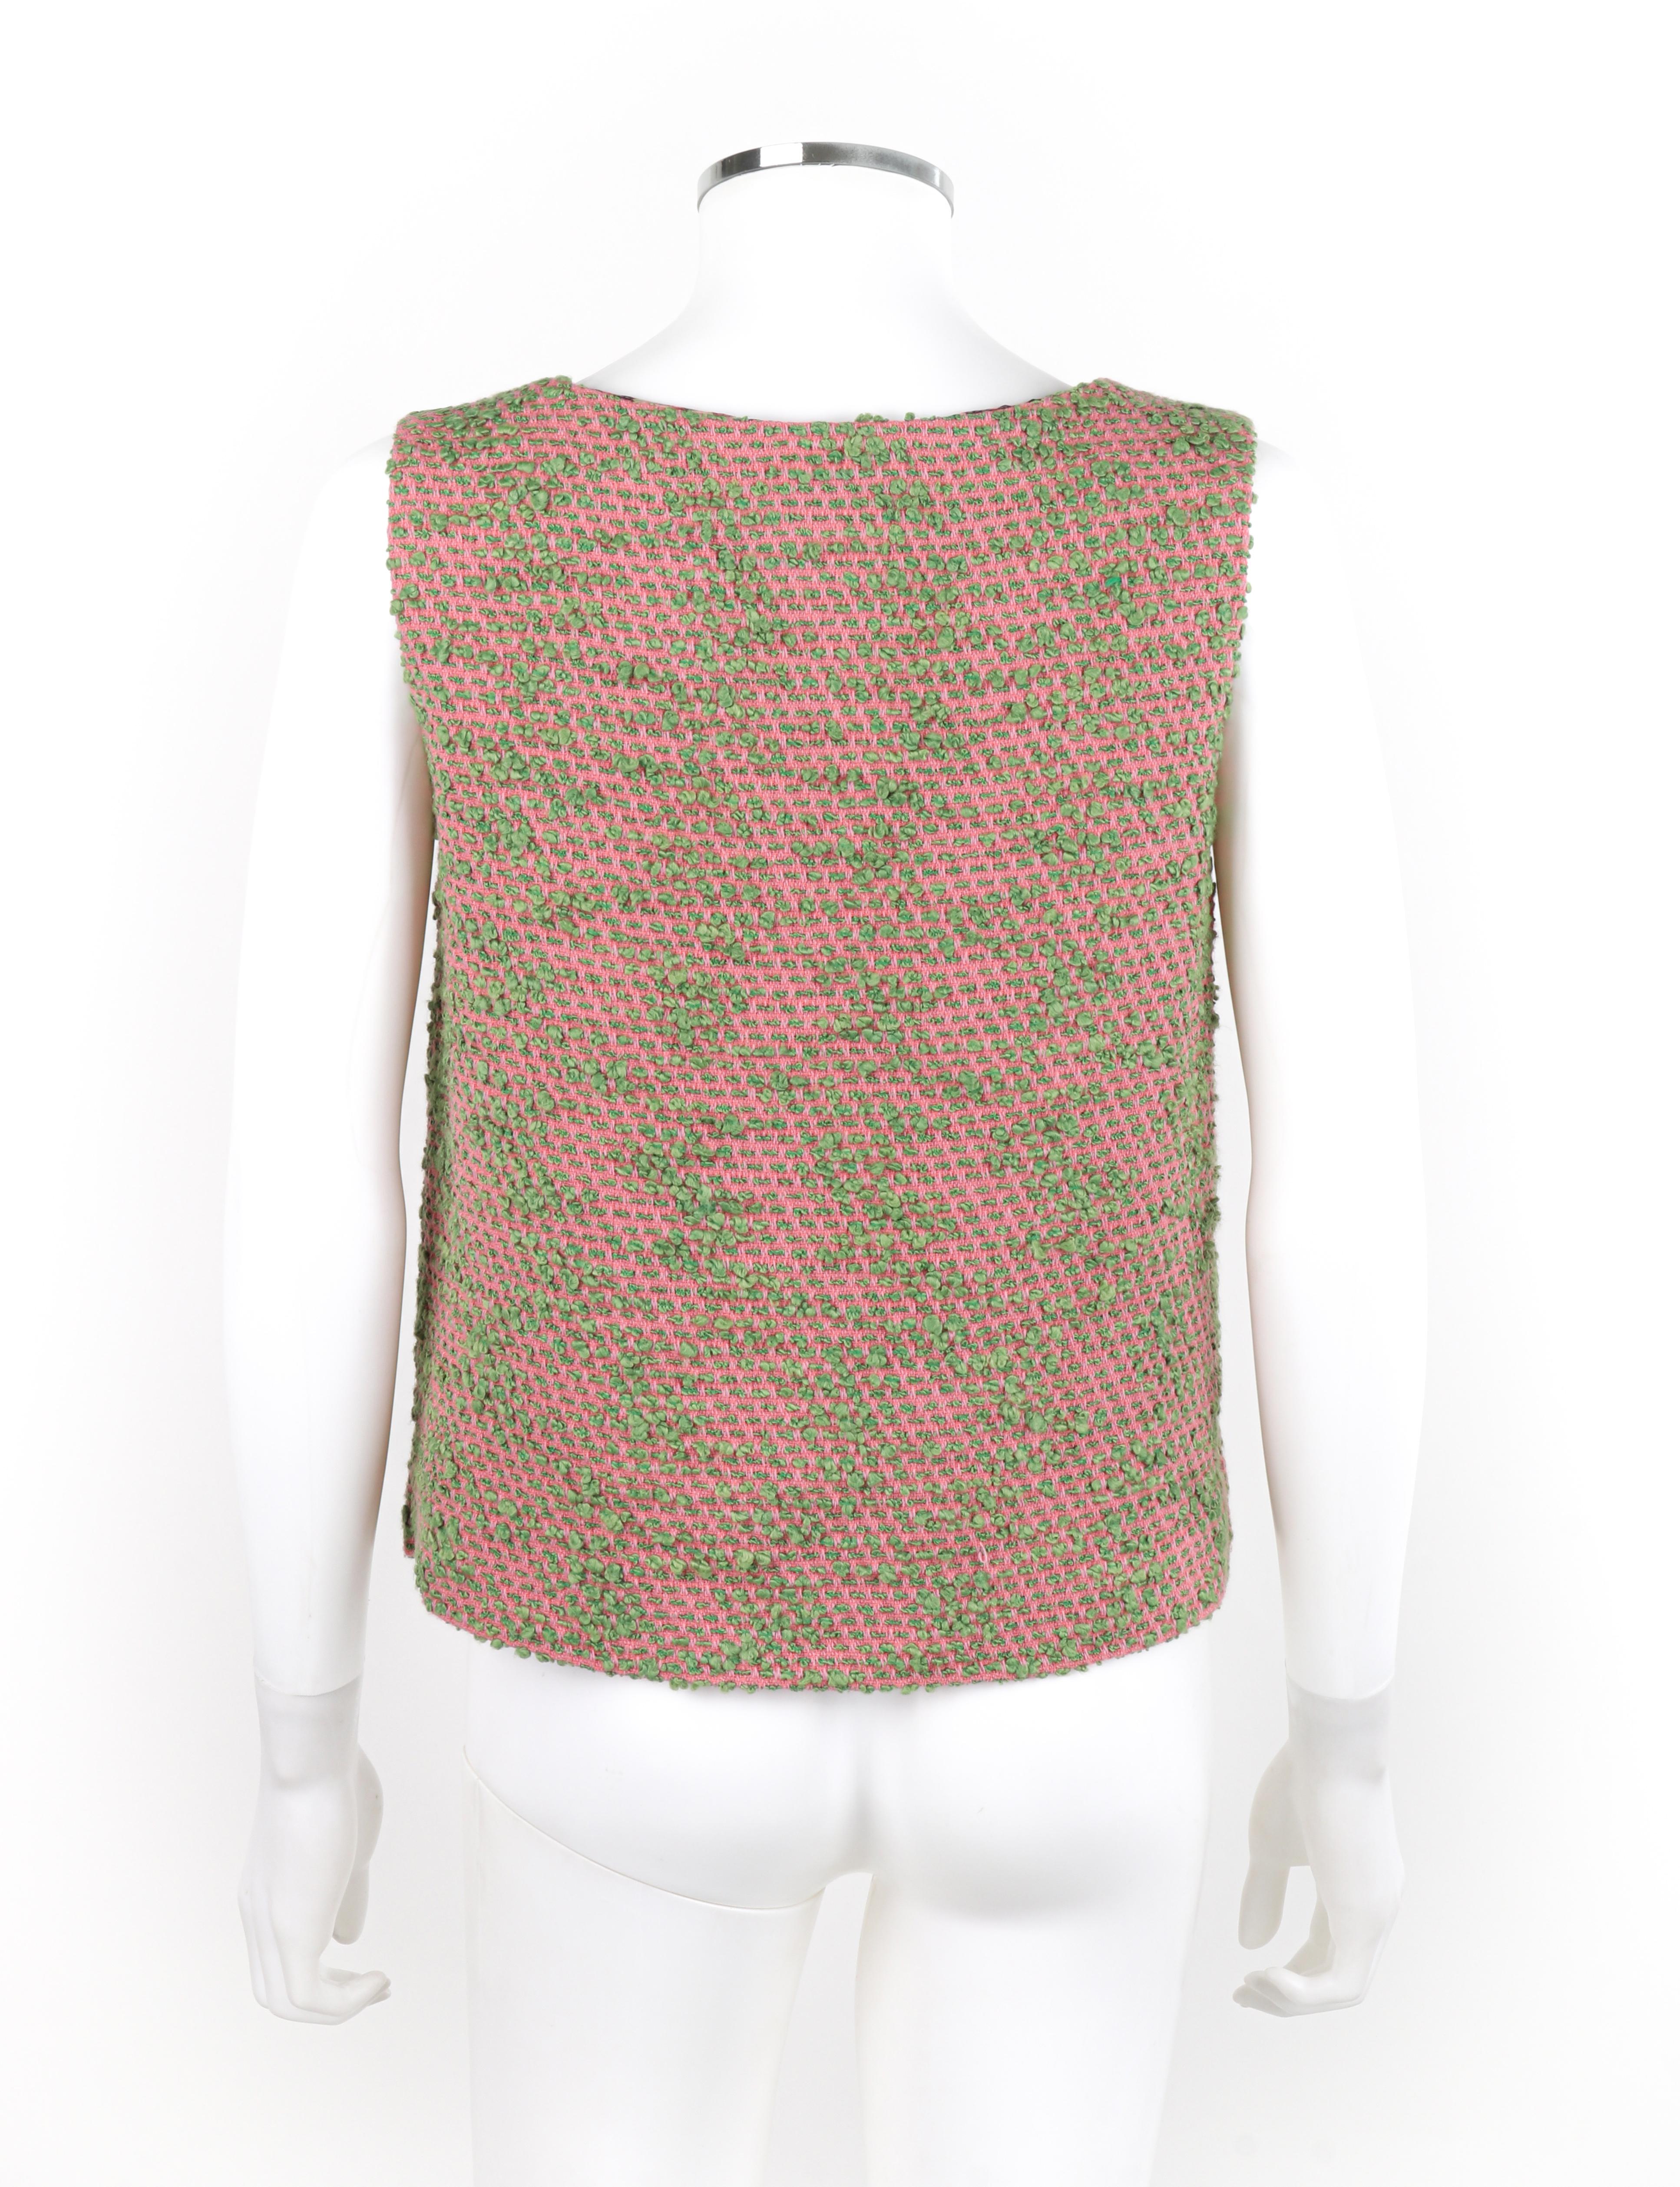 CHANEL c.2000s Pink Green Boucle Knit Silk Jacket & Tank Top Shell 2pc Size 42 en vente 3